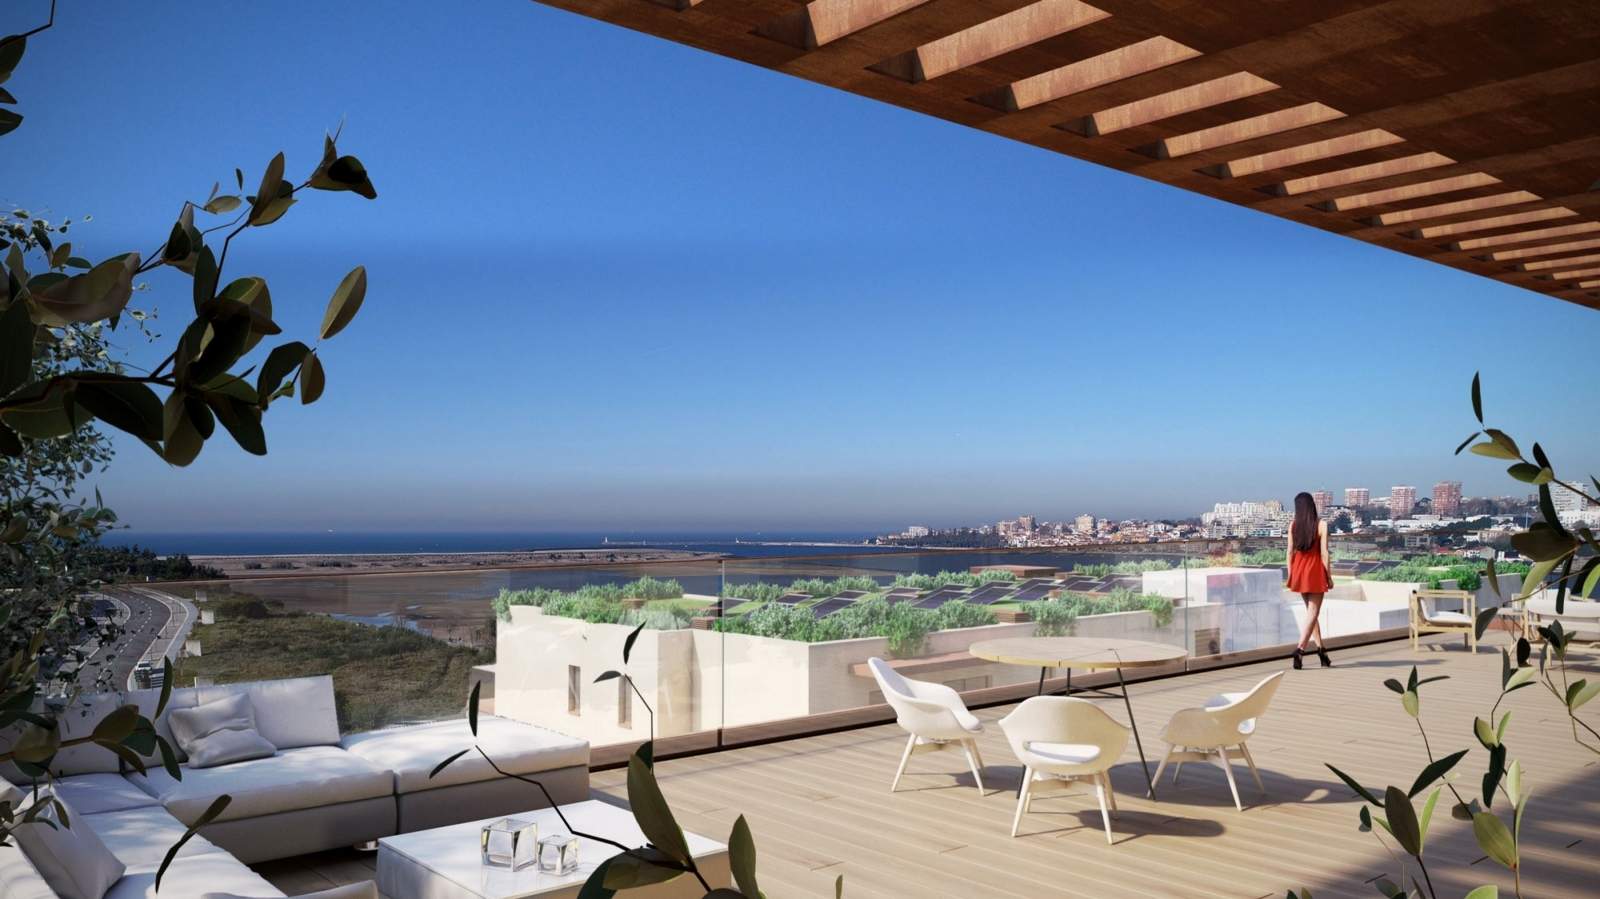 Apartment for sale with terrace, in exclusive condominium, V. N. Gaia, Porto, Portugal_176032